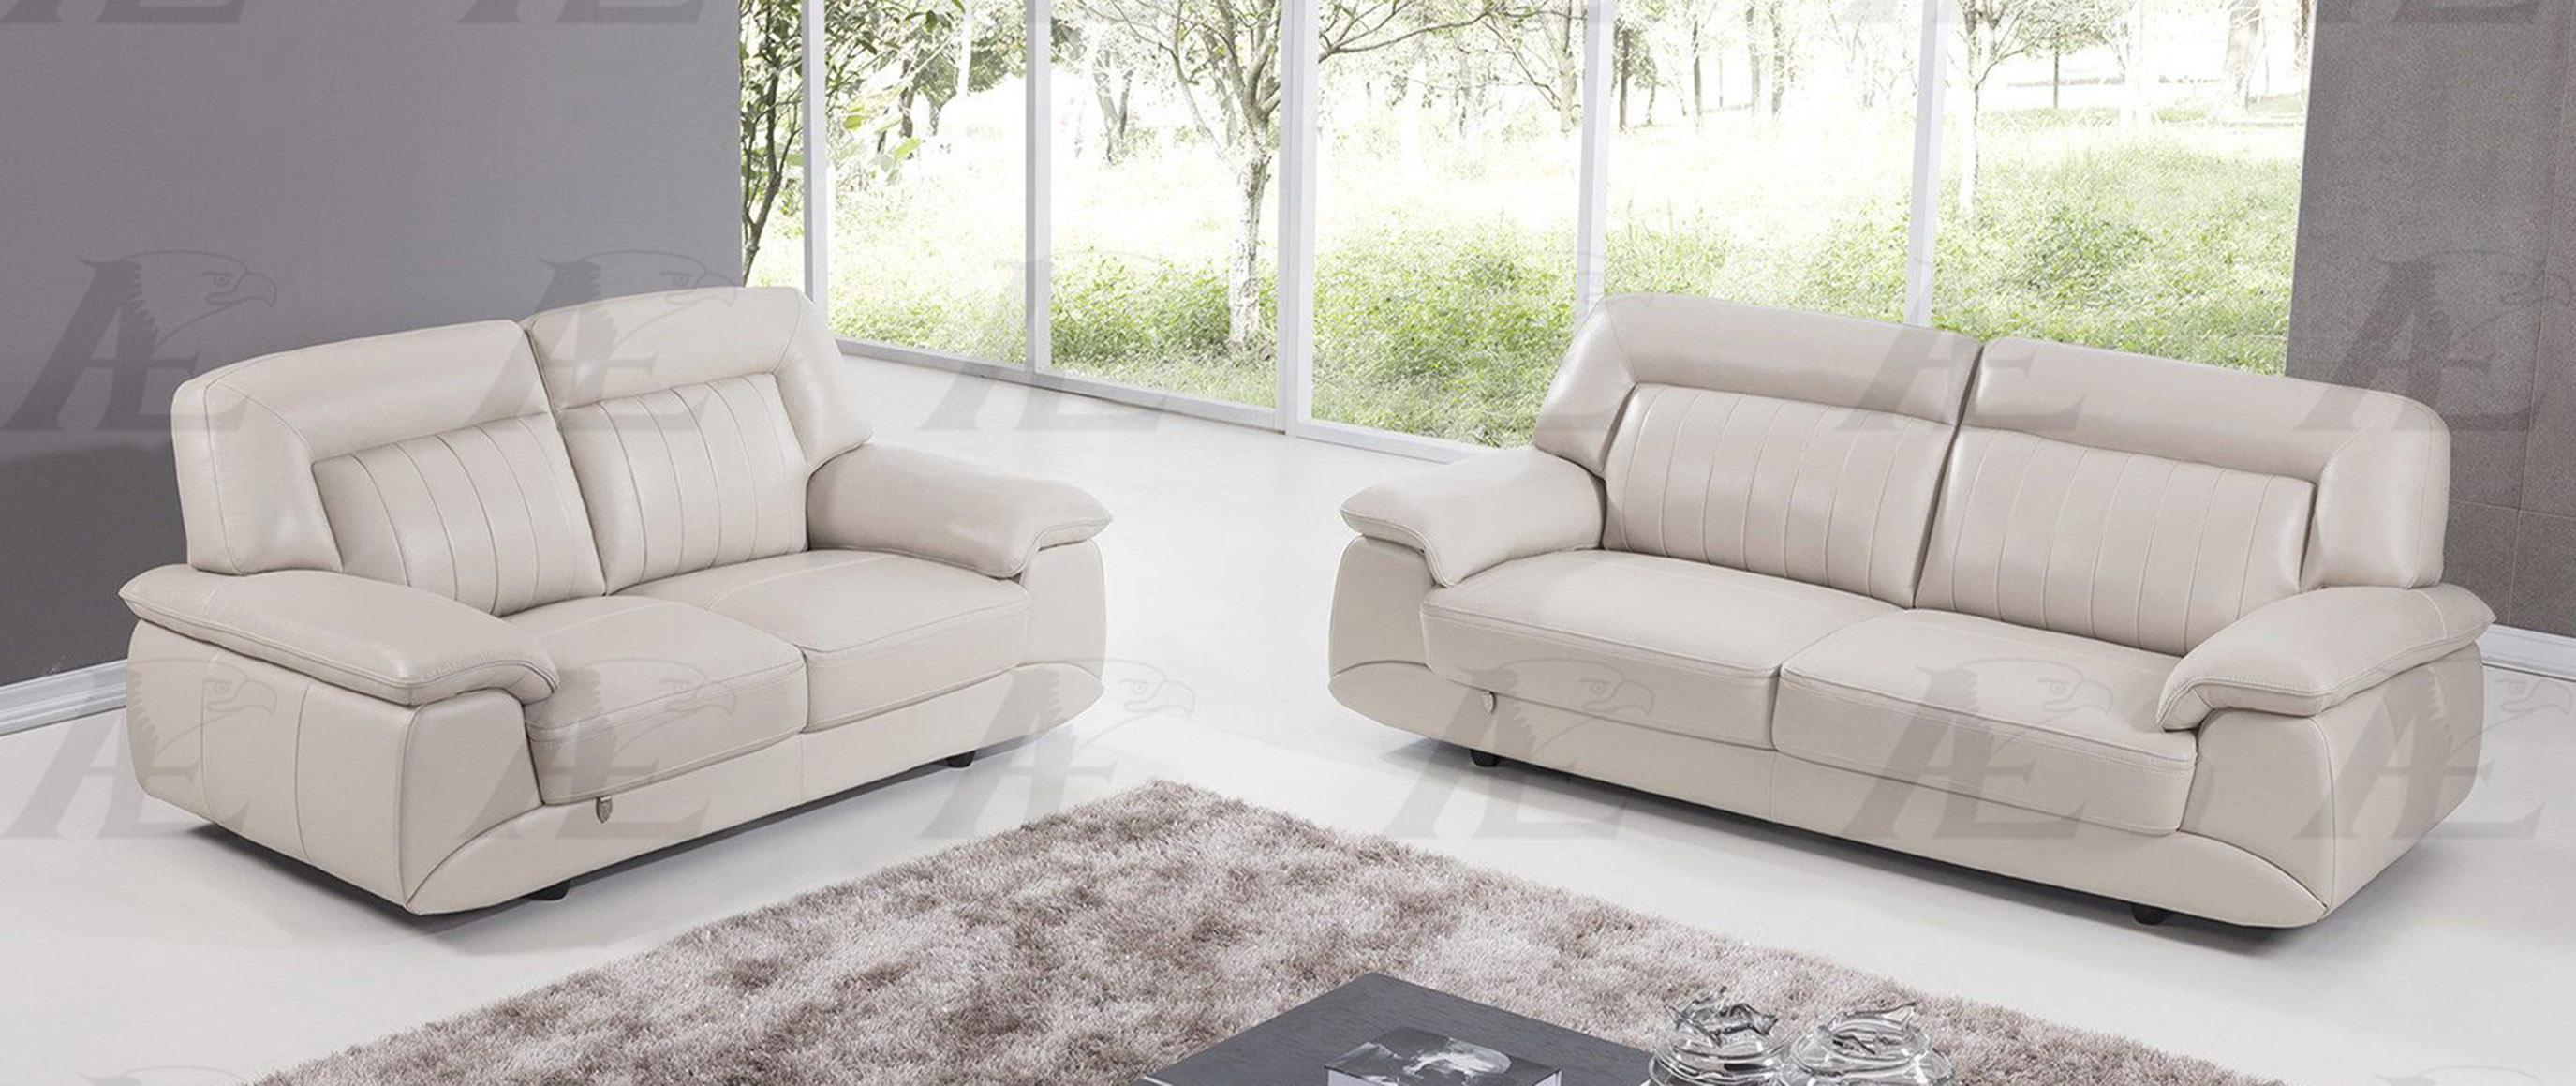 

    
American Eagle Furniture EK072-LG Light Gray Italian Leather Sofa and Loveseat Set 2Pcs
